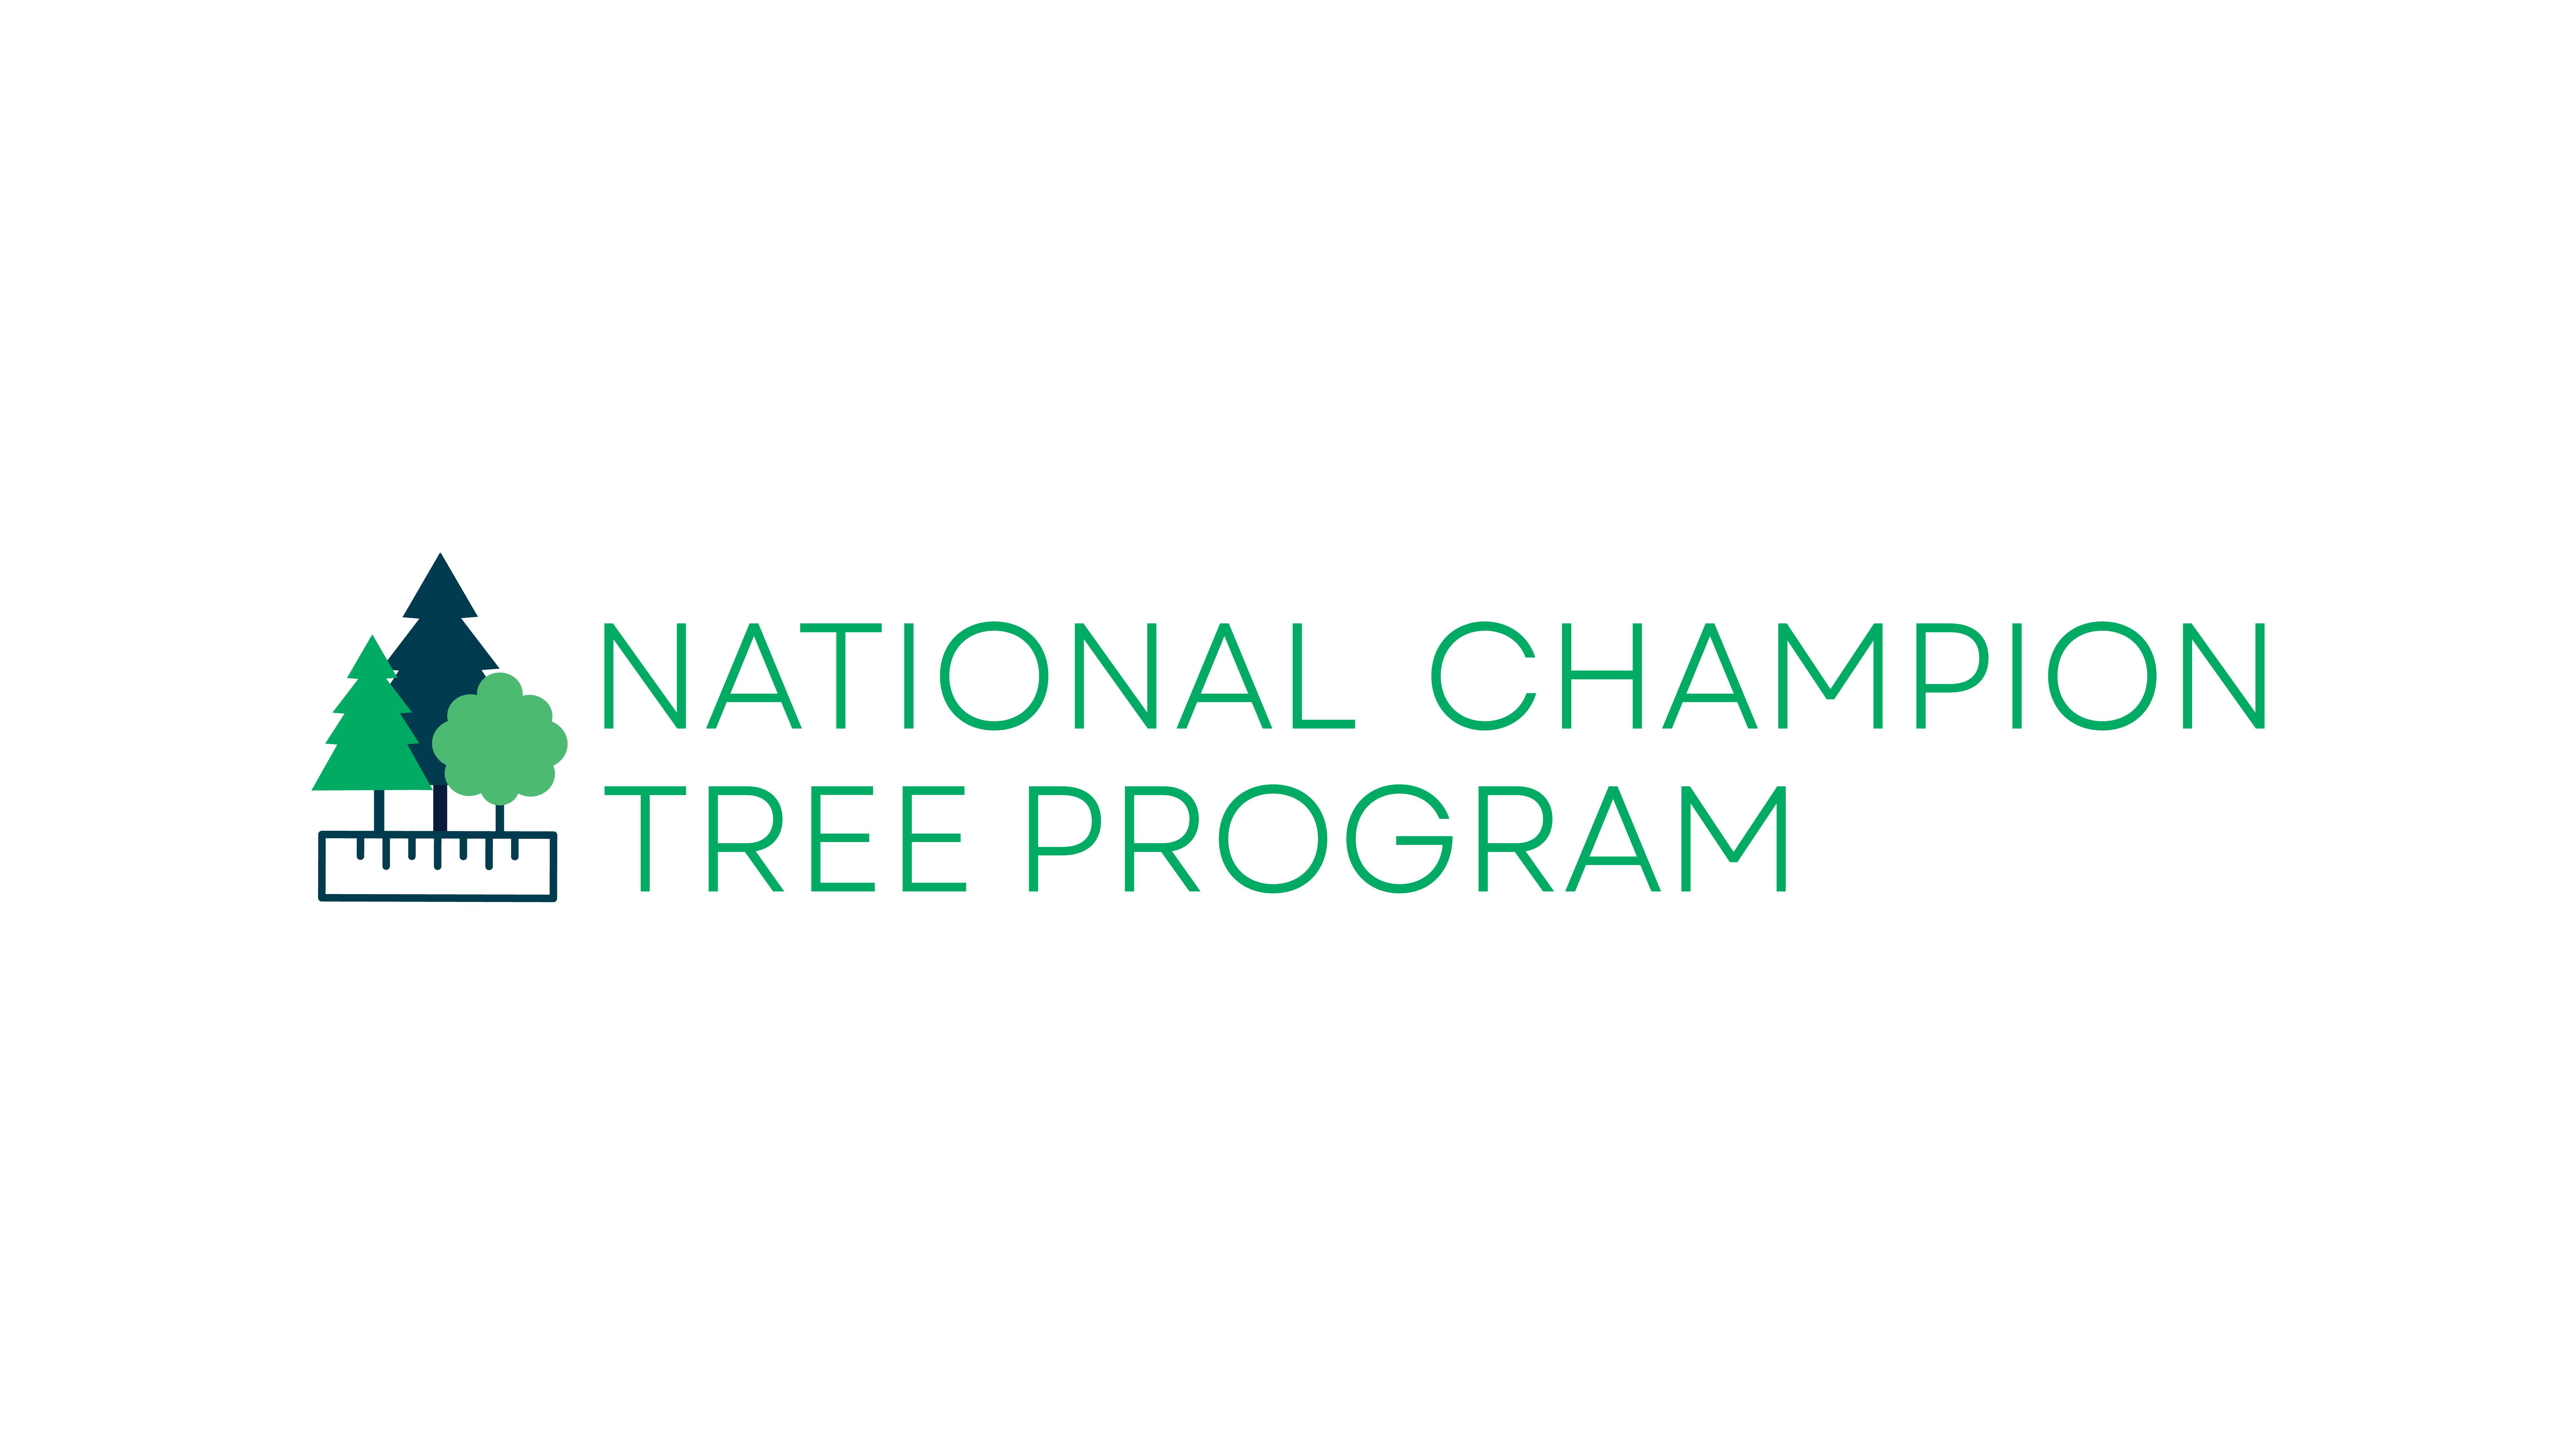 National Champion Tree Program logo